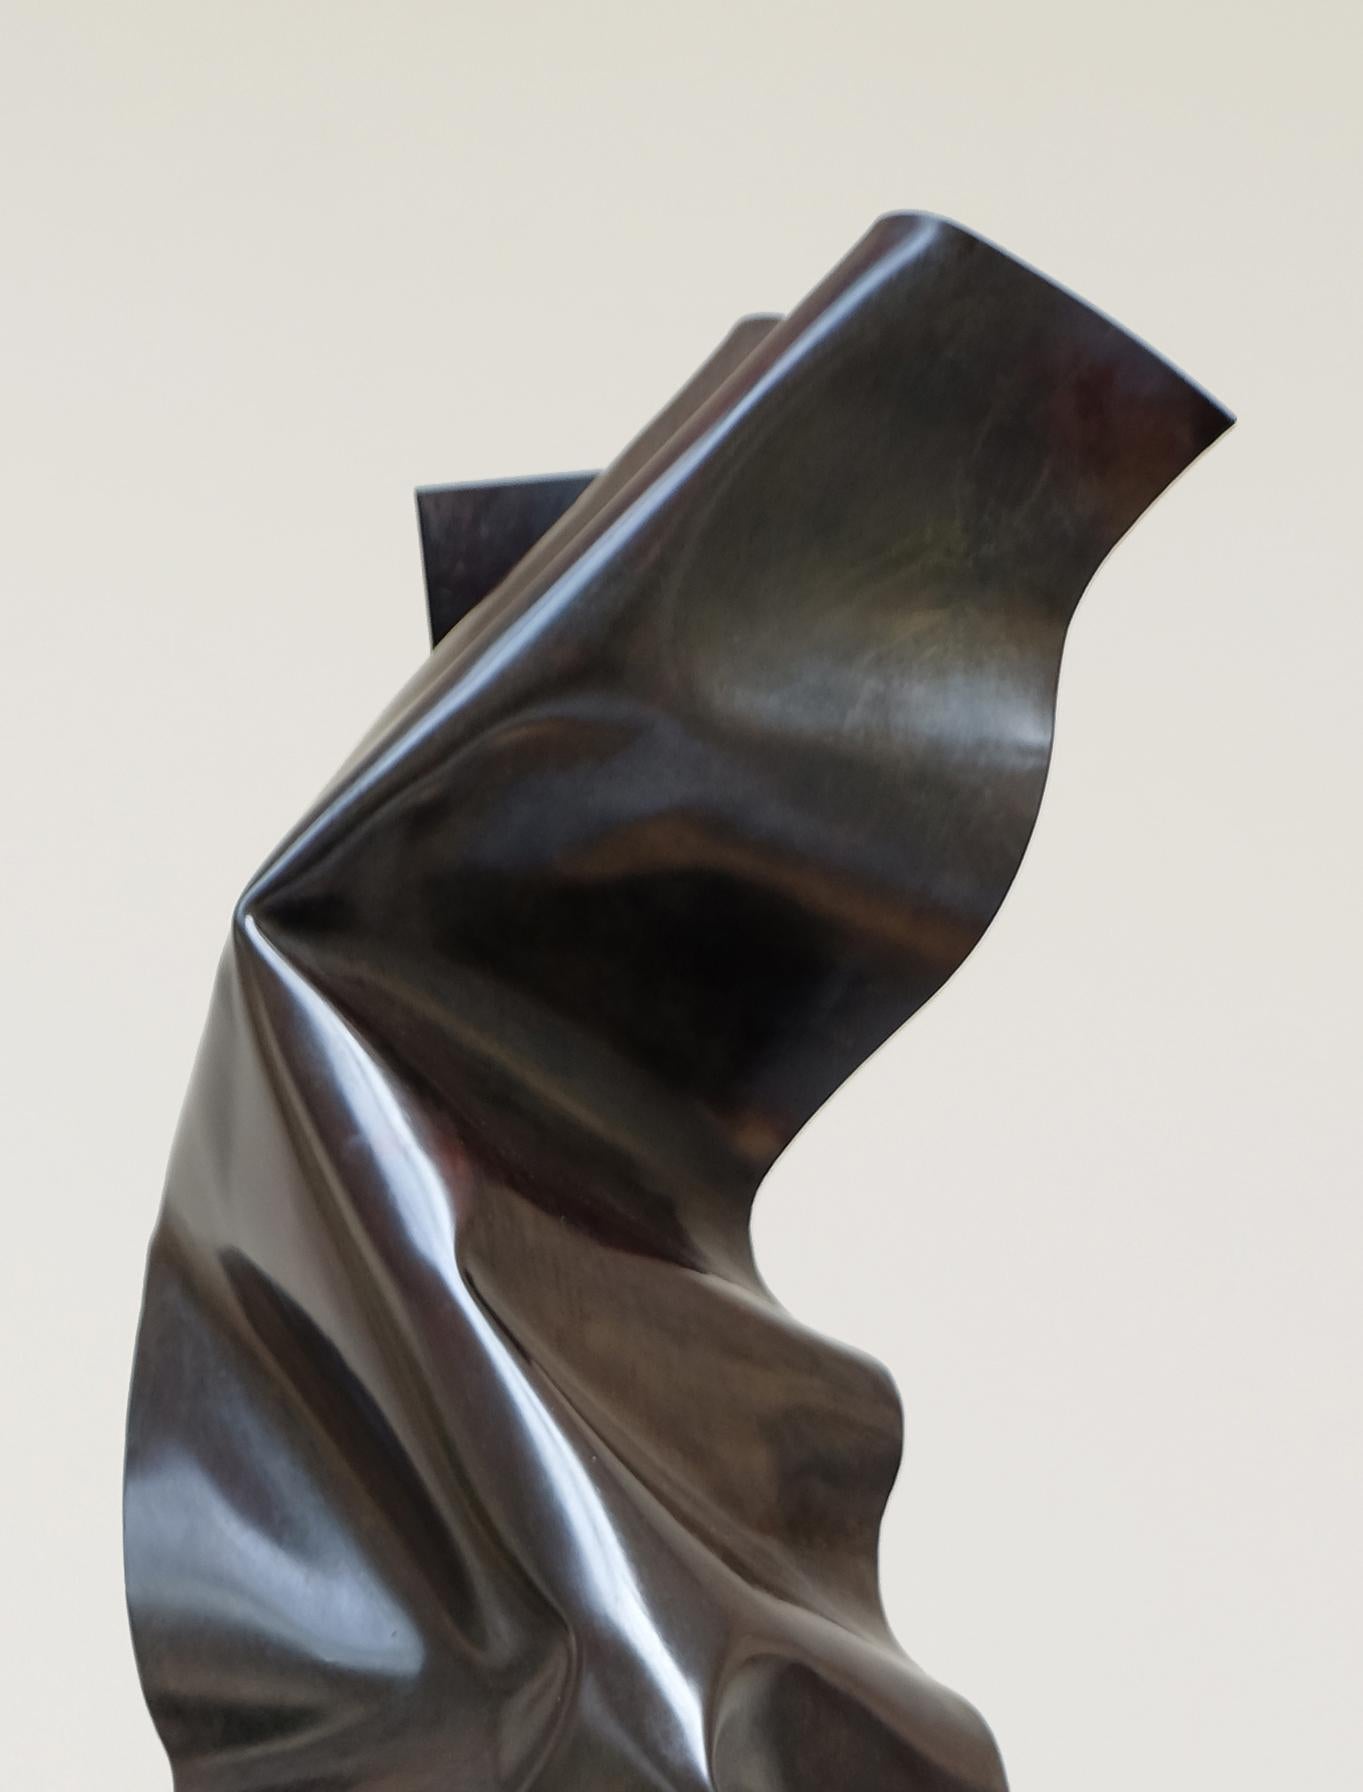 Sans Titre No. 5 by Francesco Moretti - Abstracted copper sculpture For Sale 1